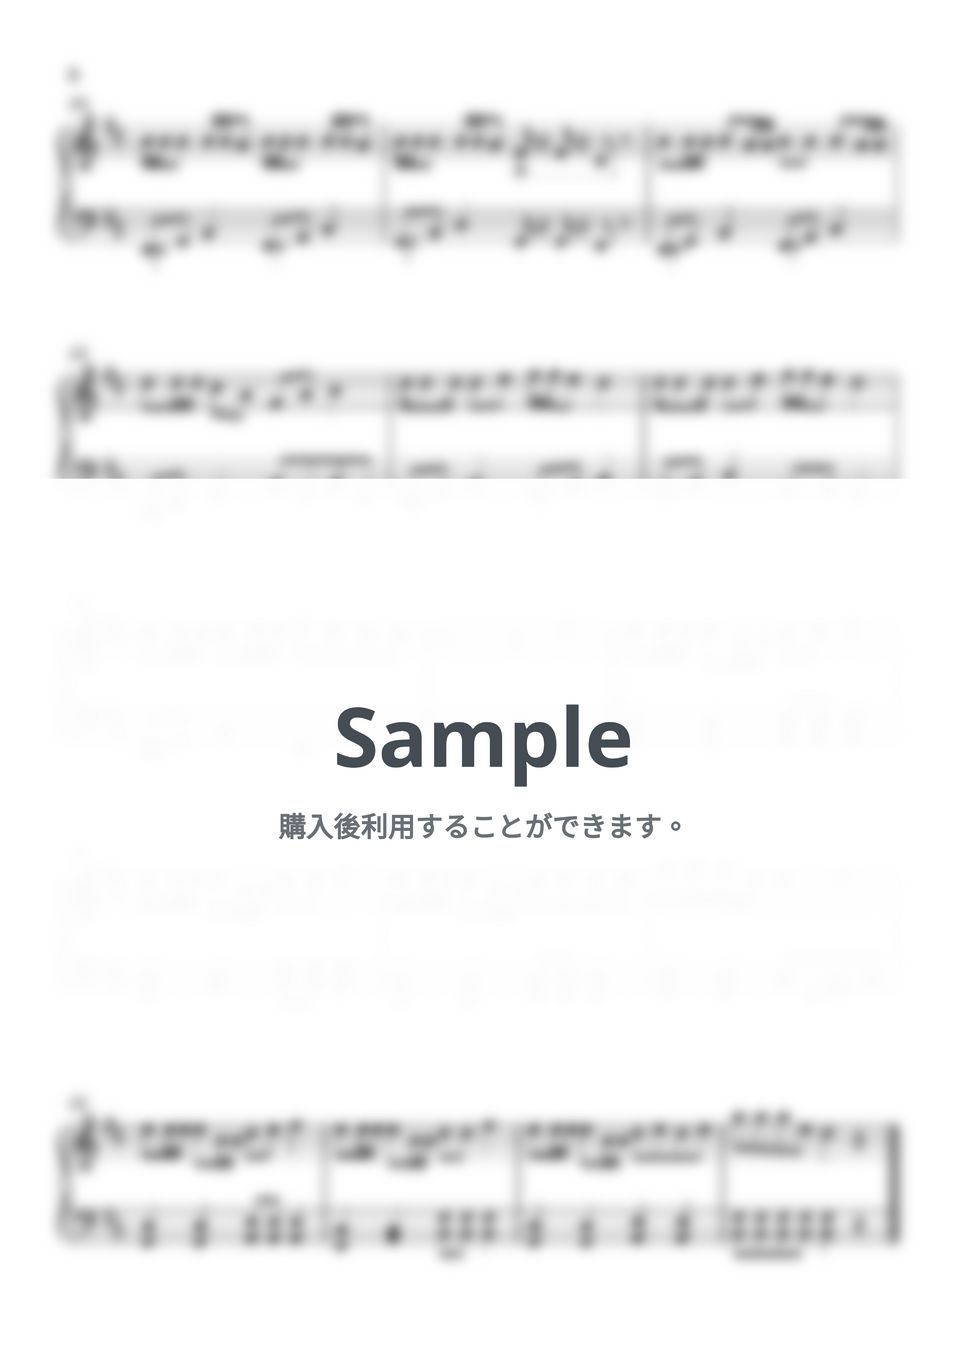 SixTONES - うやむや (ピアノ初心者向け) by Piano Lovers. jp